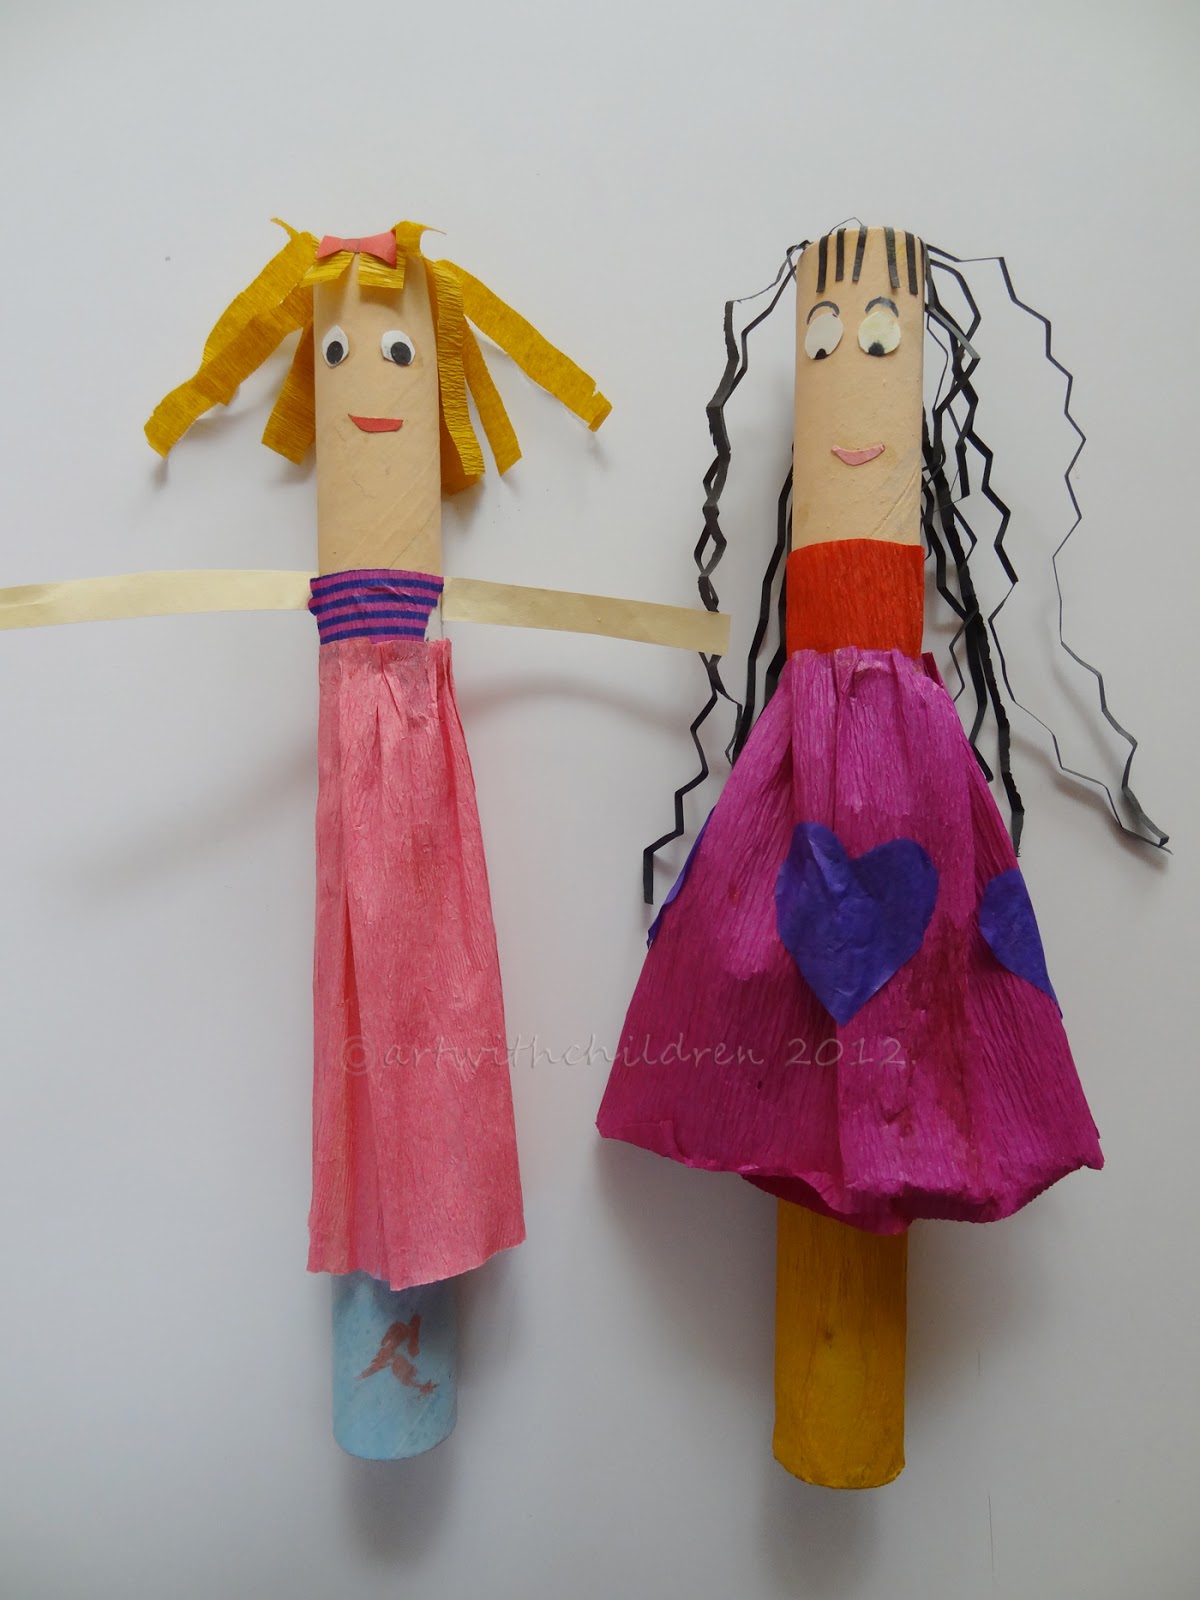 Cardboard tube puppets